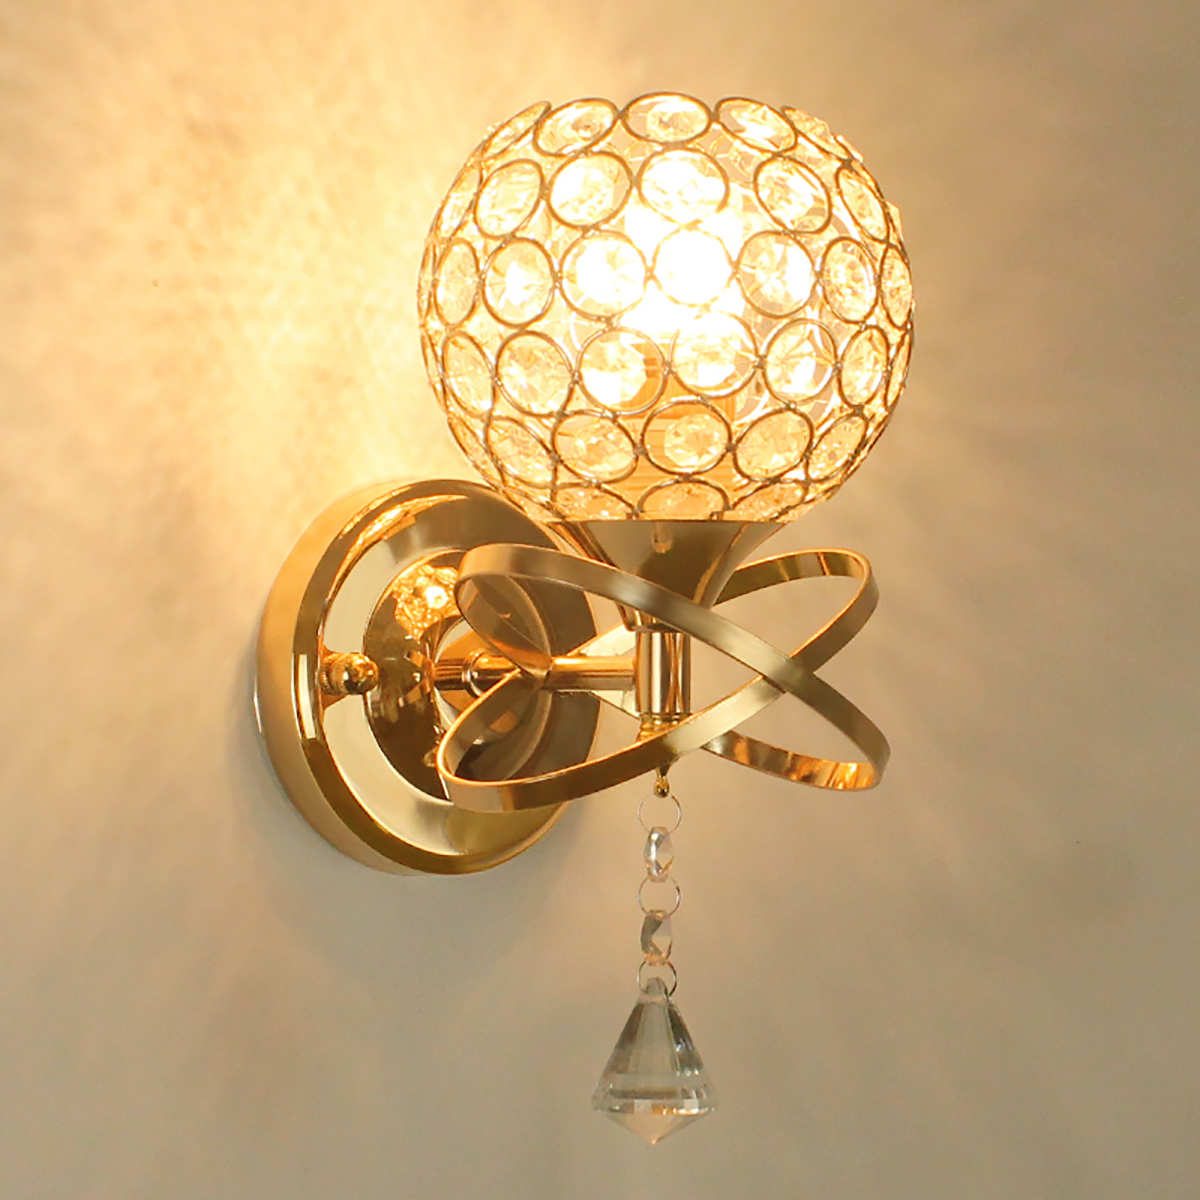 110-220V-E14-Modern-Chrome-Crystal-LED-Wall-Light-Lamp-Luxury-Bedside-Bedroom-Home-Decor-Without-Bul-1797018-7